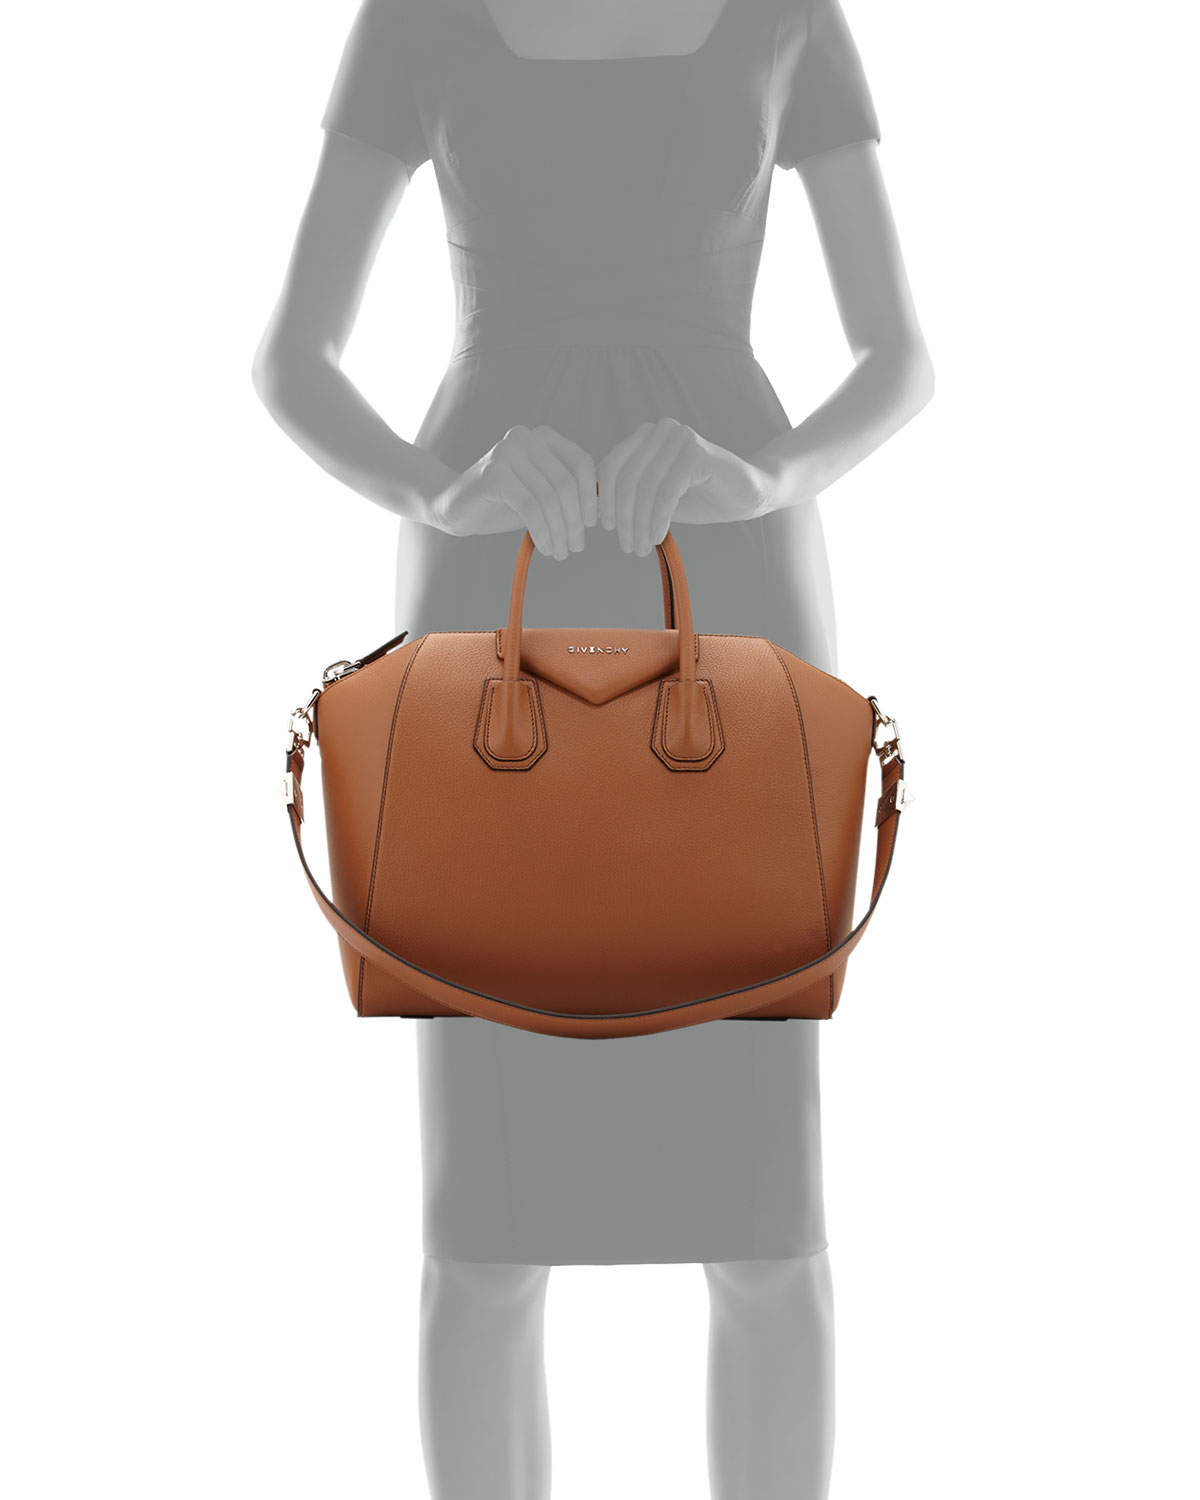 Givenchy Antigona Medium Leather Satchel Bag in Caramel (Brown) - Lyst